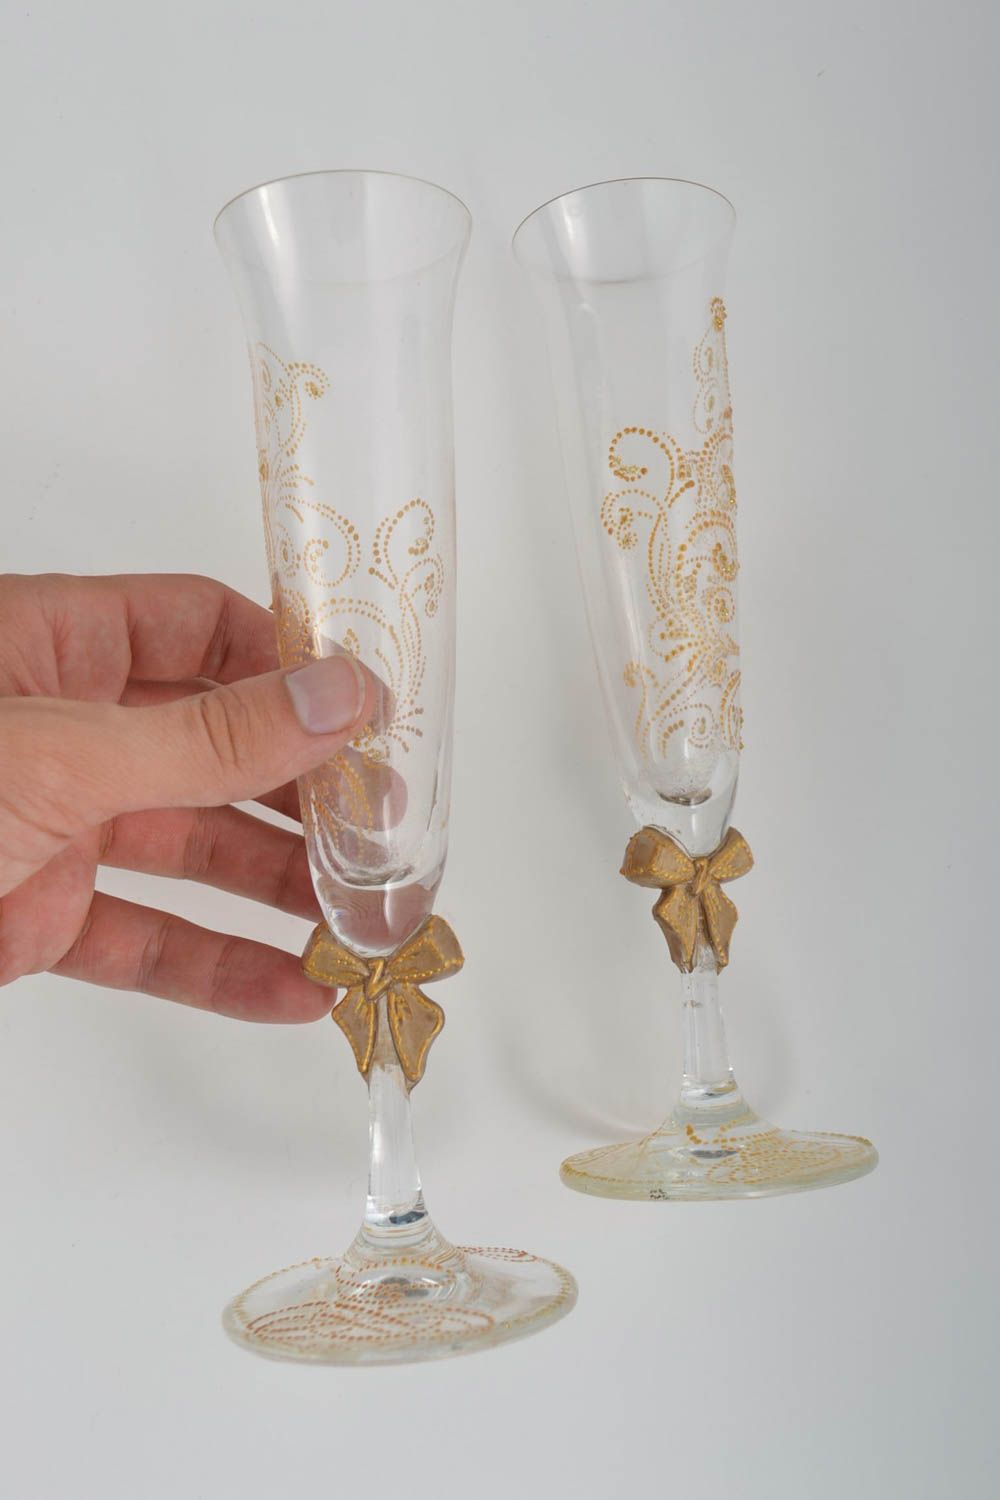 Dos copas de cristal hechas a mano utensilios de cocina vajillas modernas foto 5